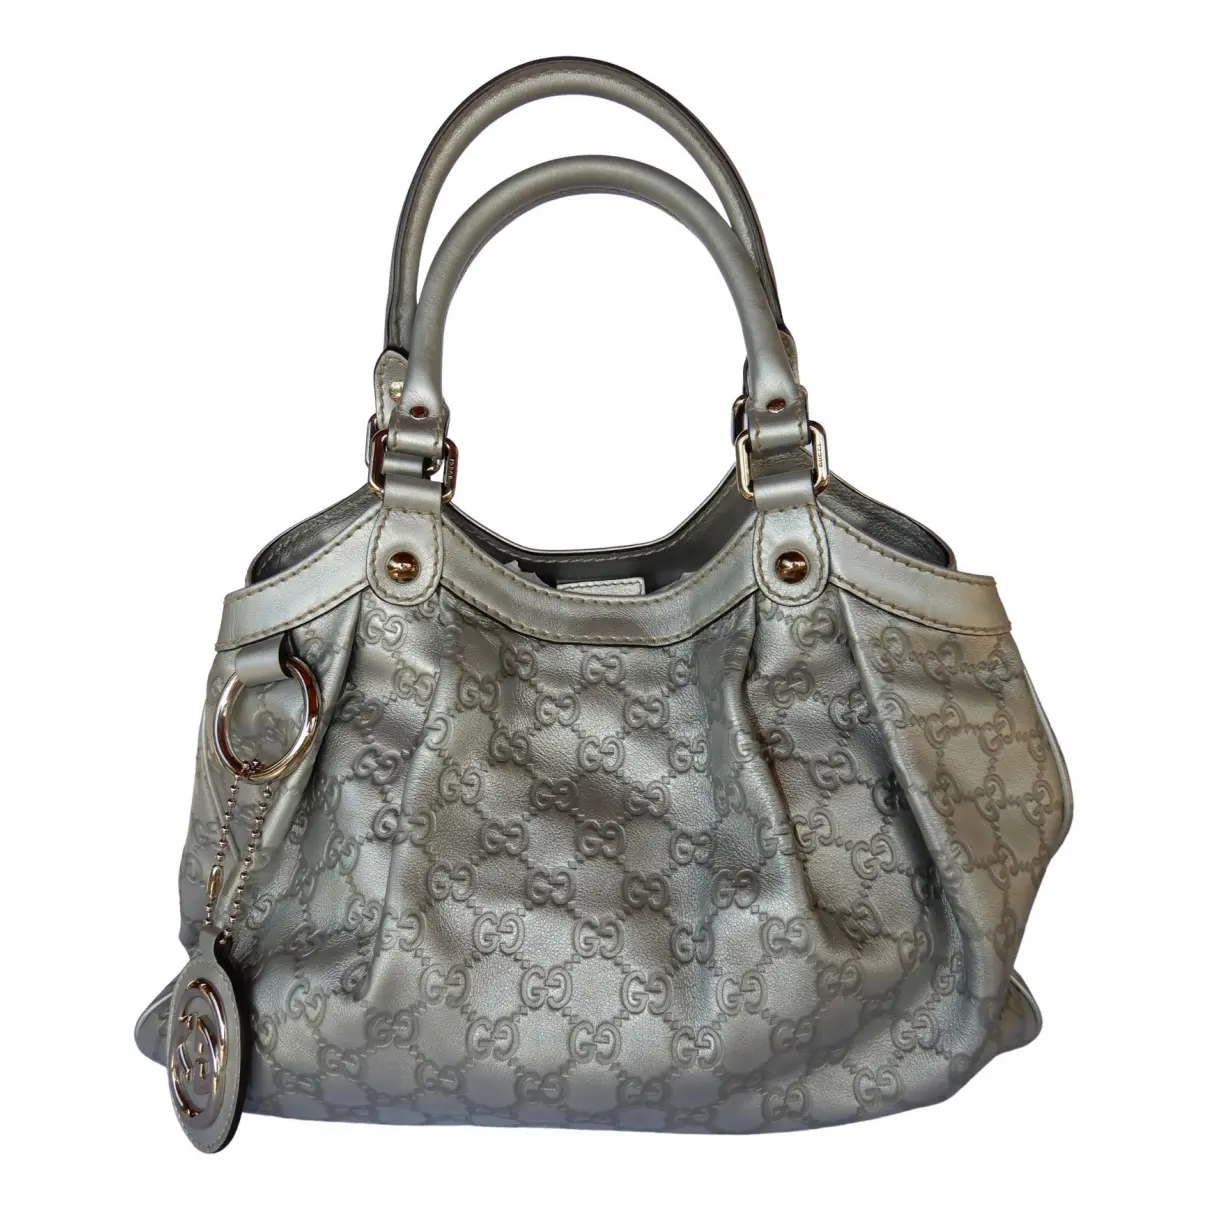 Sukey leather handbag Gucci